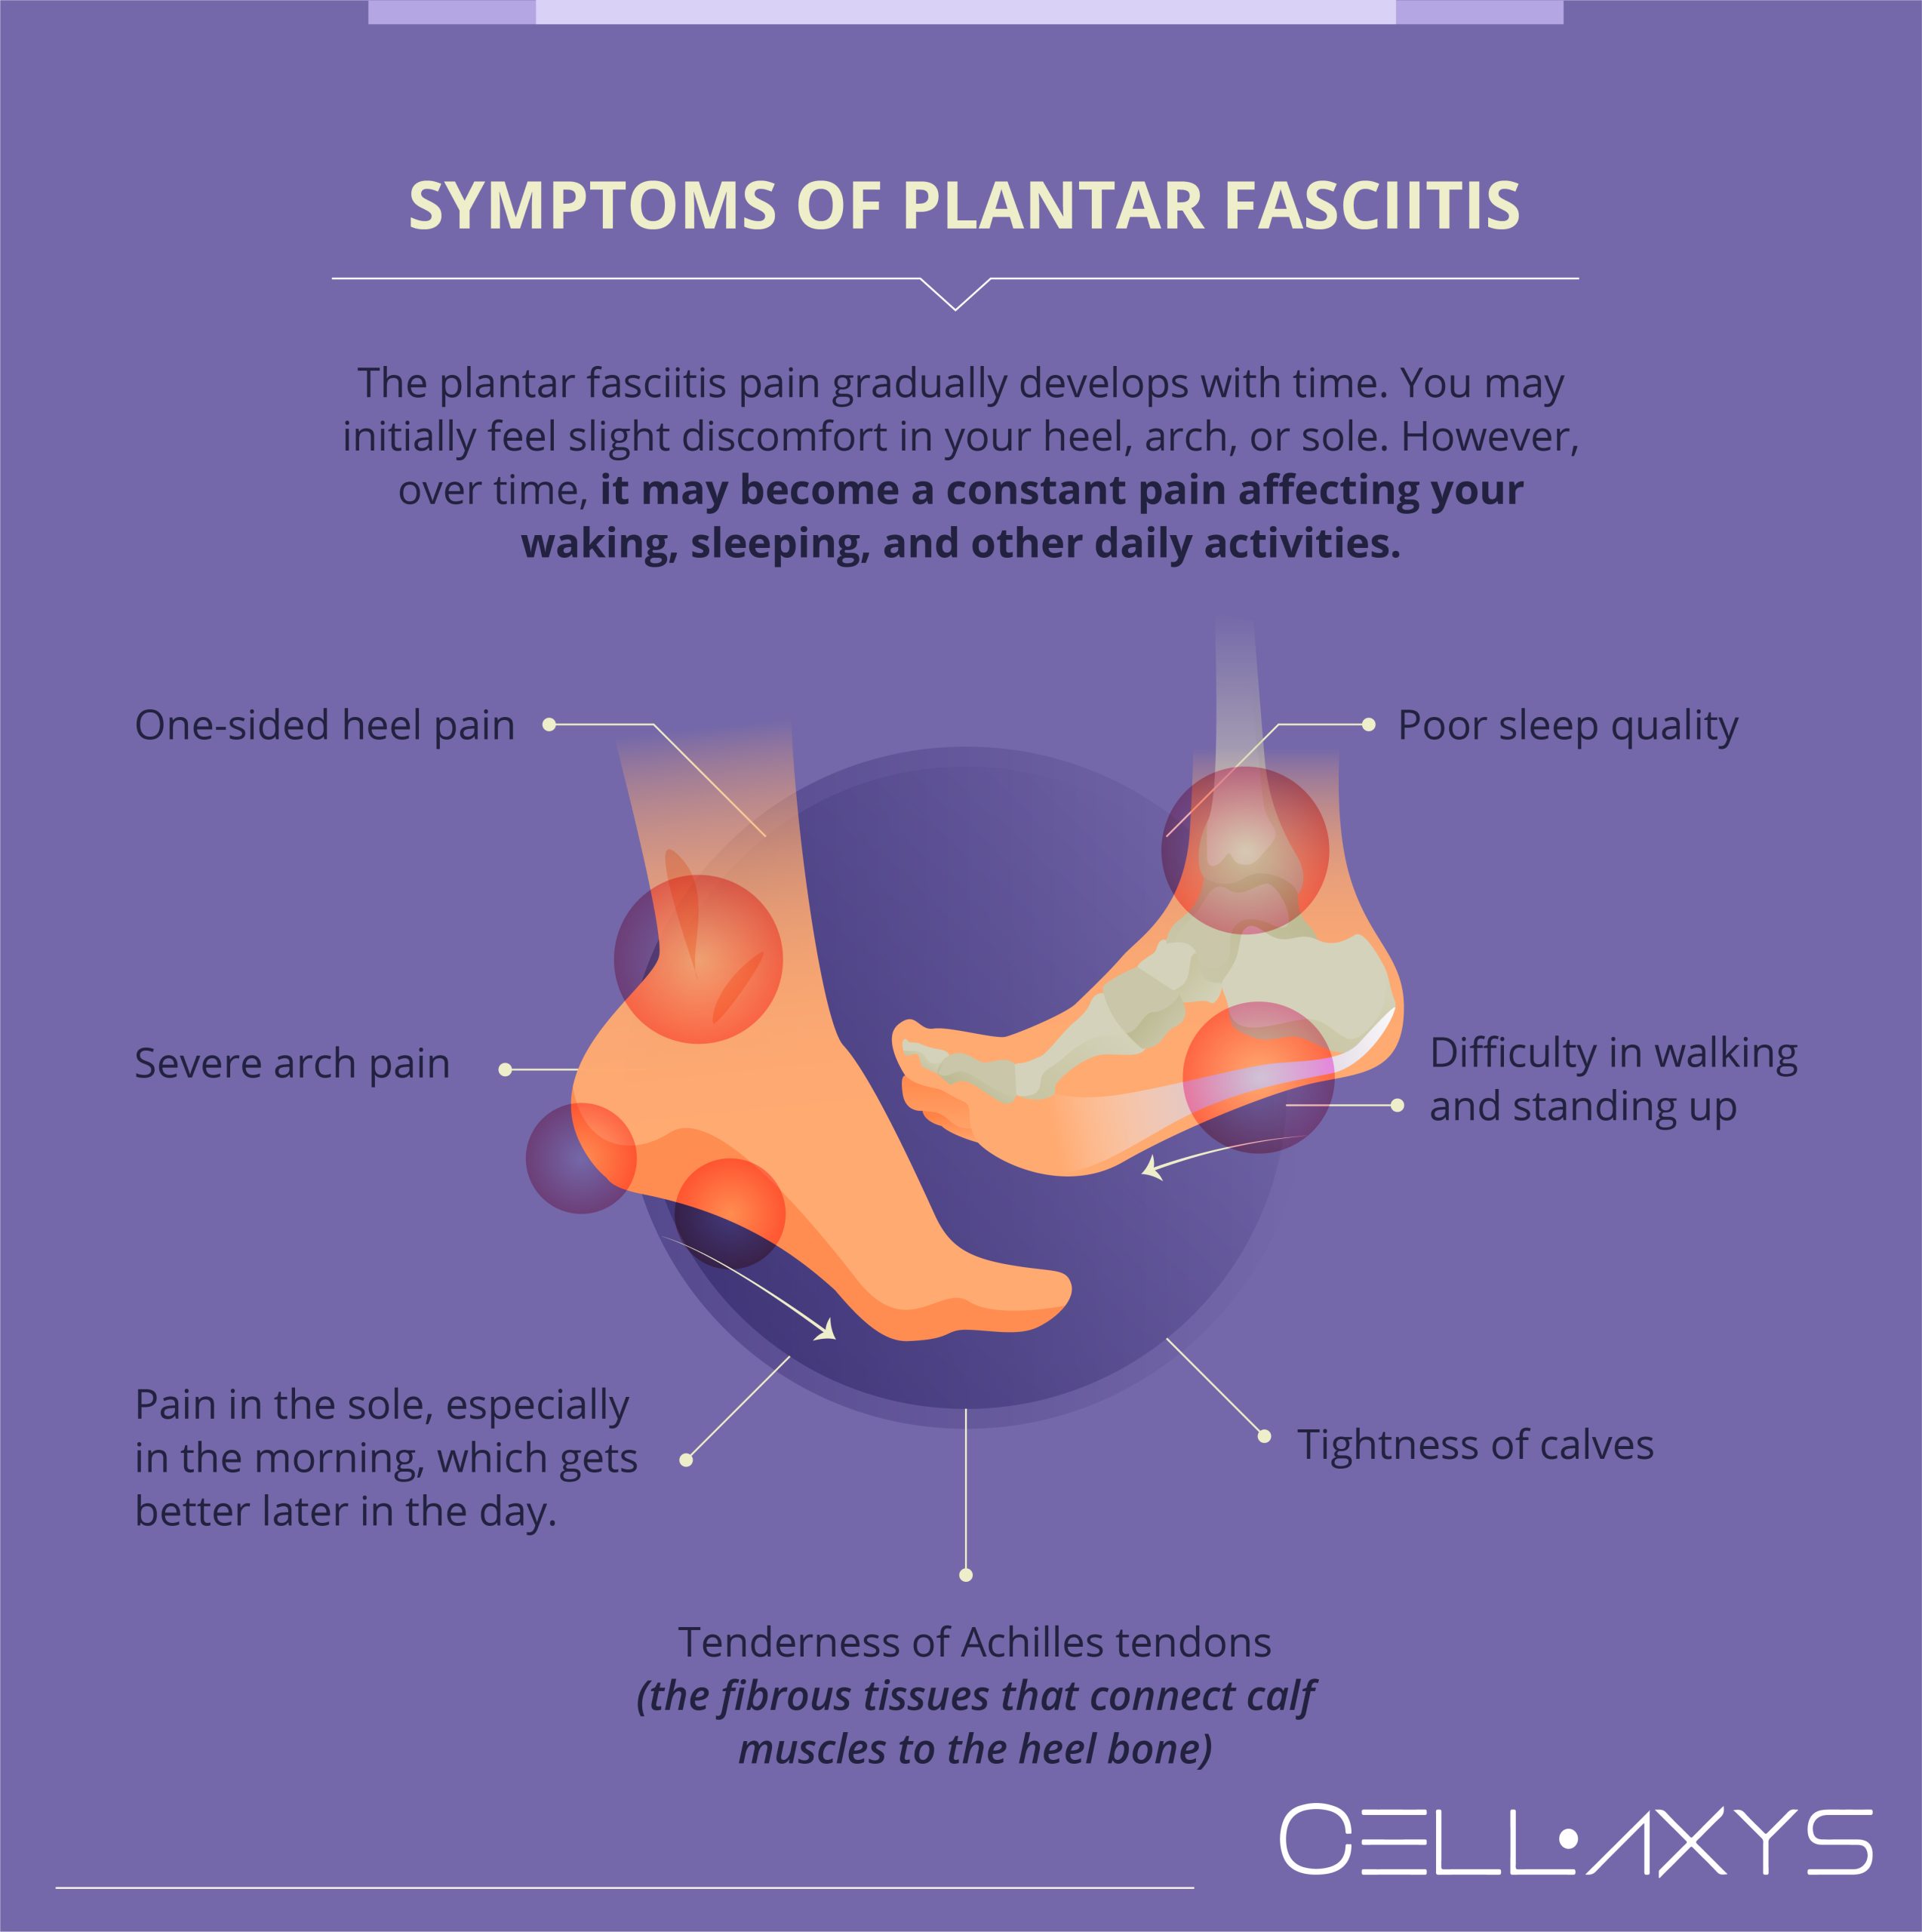 Symptoms of Plantar Fasciitis